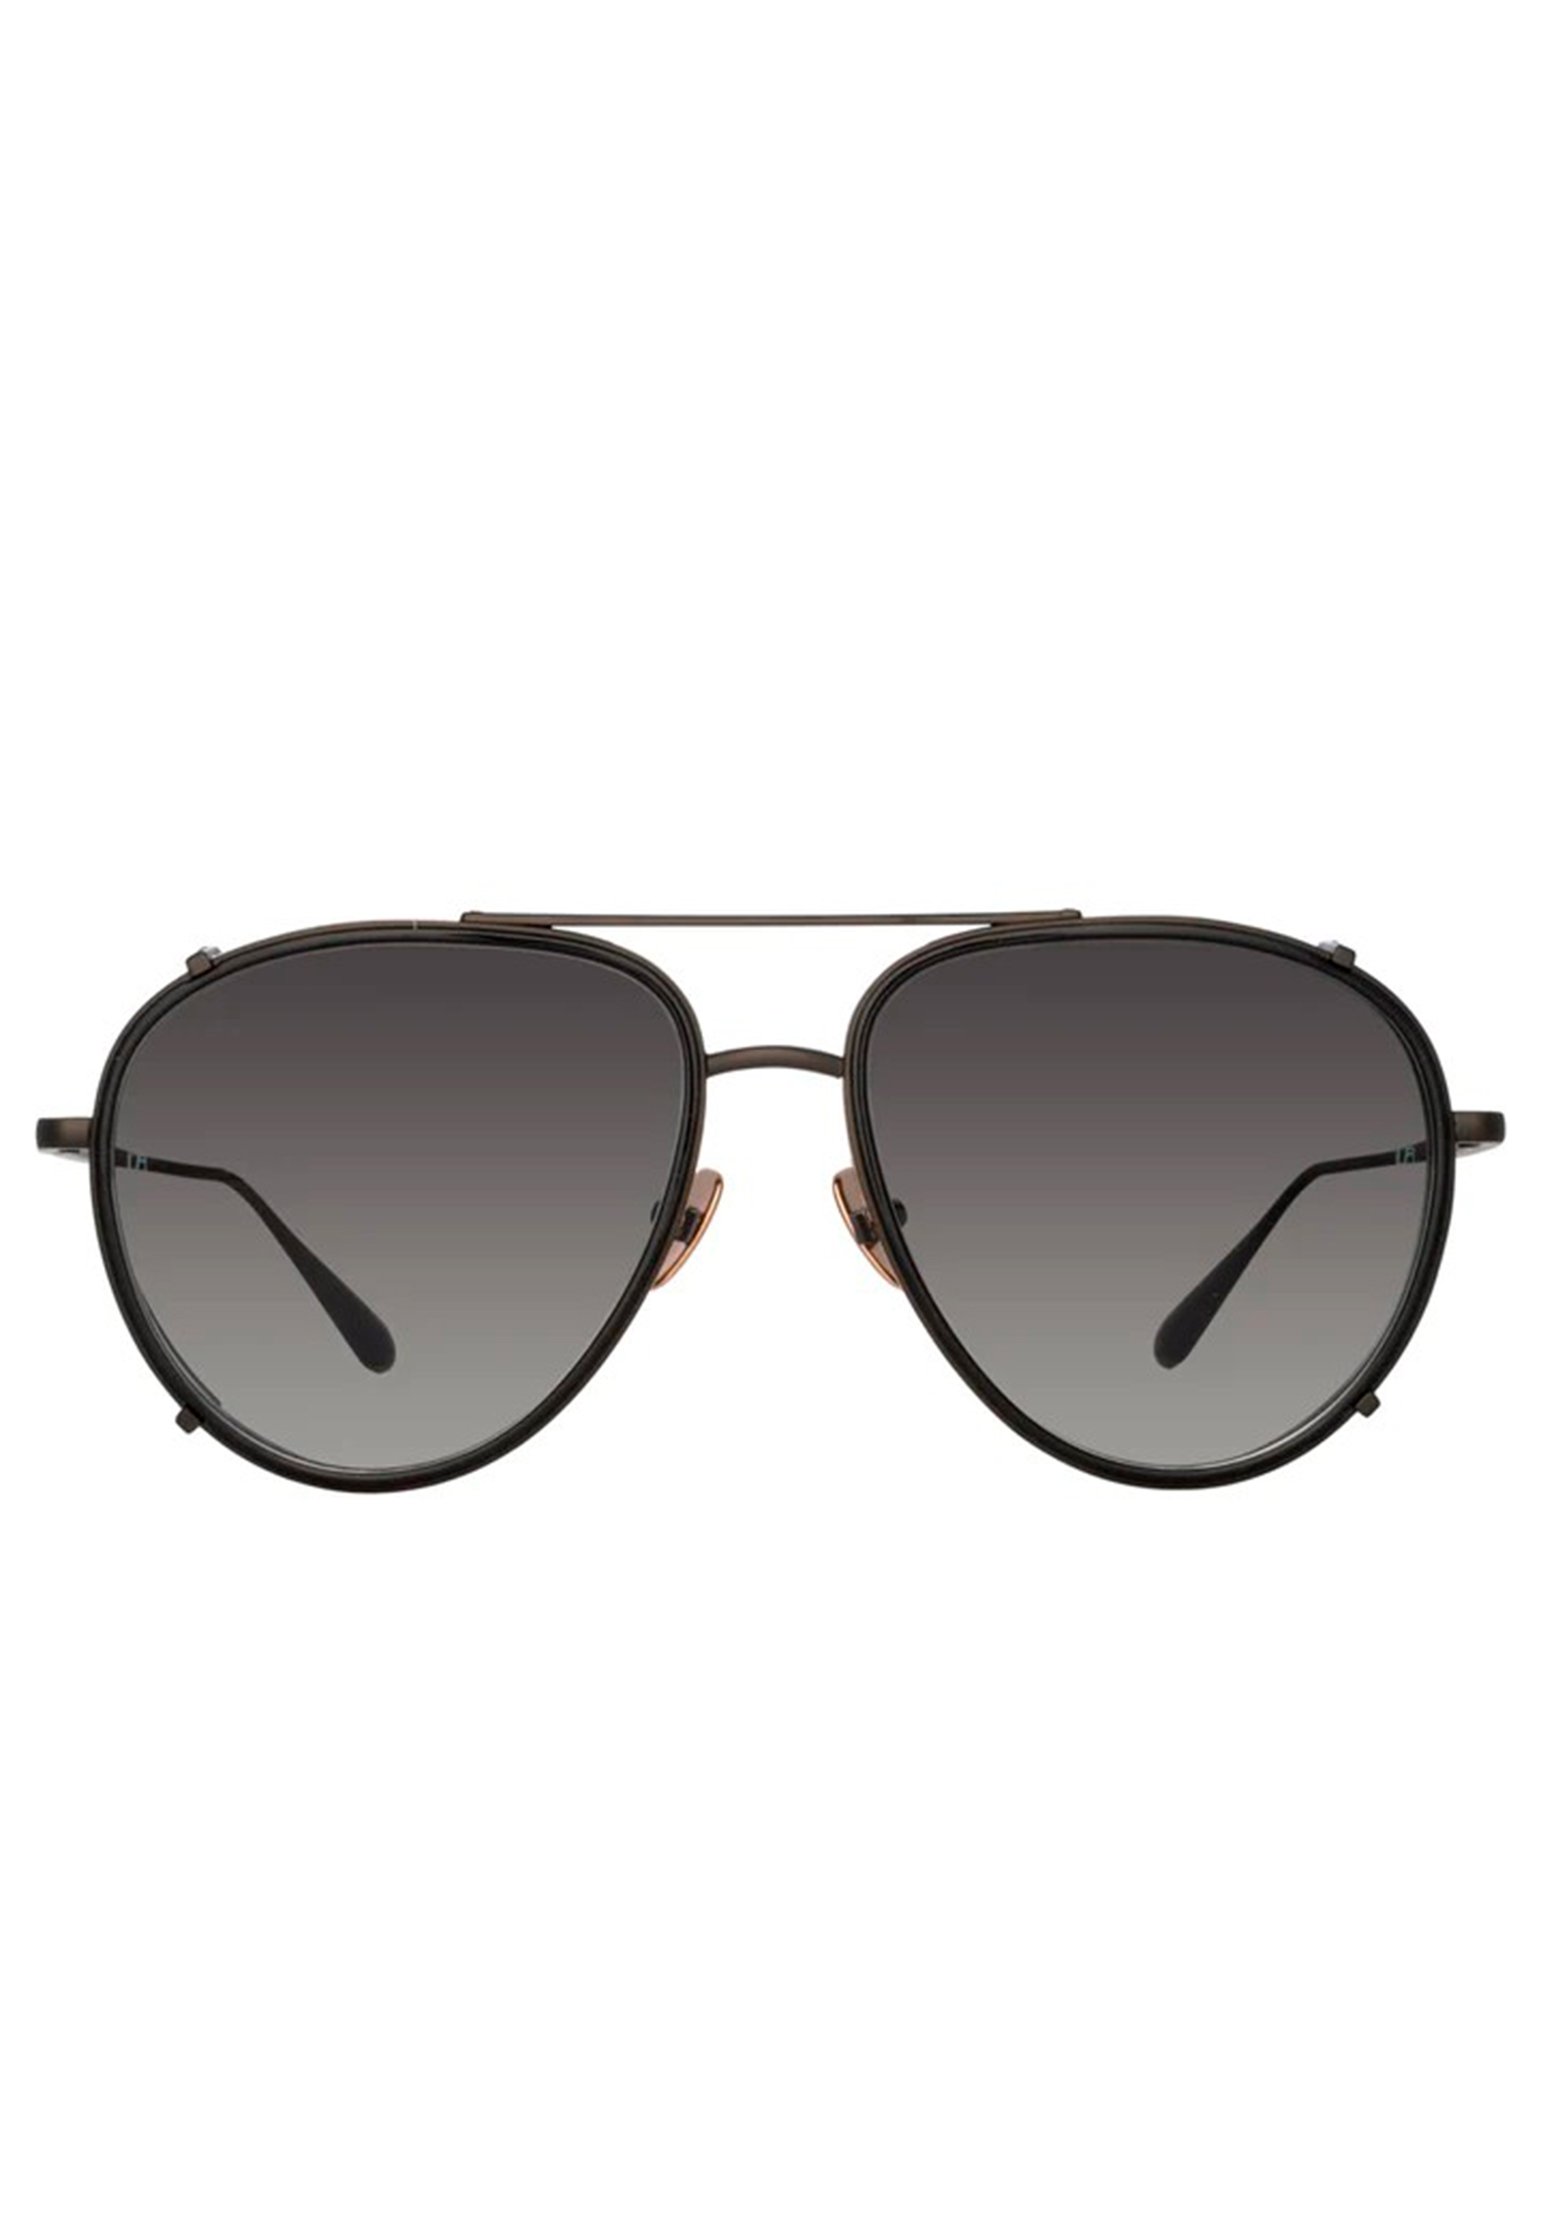 Sunglasses LINDA FARROW Color: grey (Code: 4024) in online store Allure